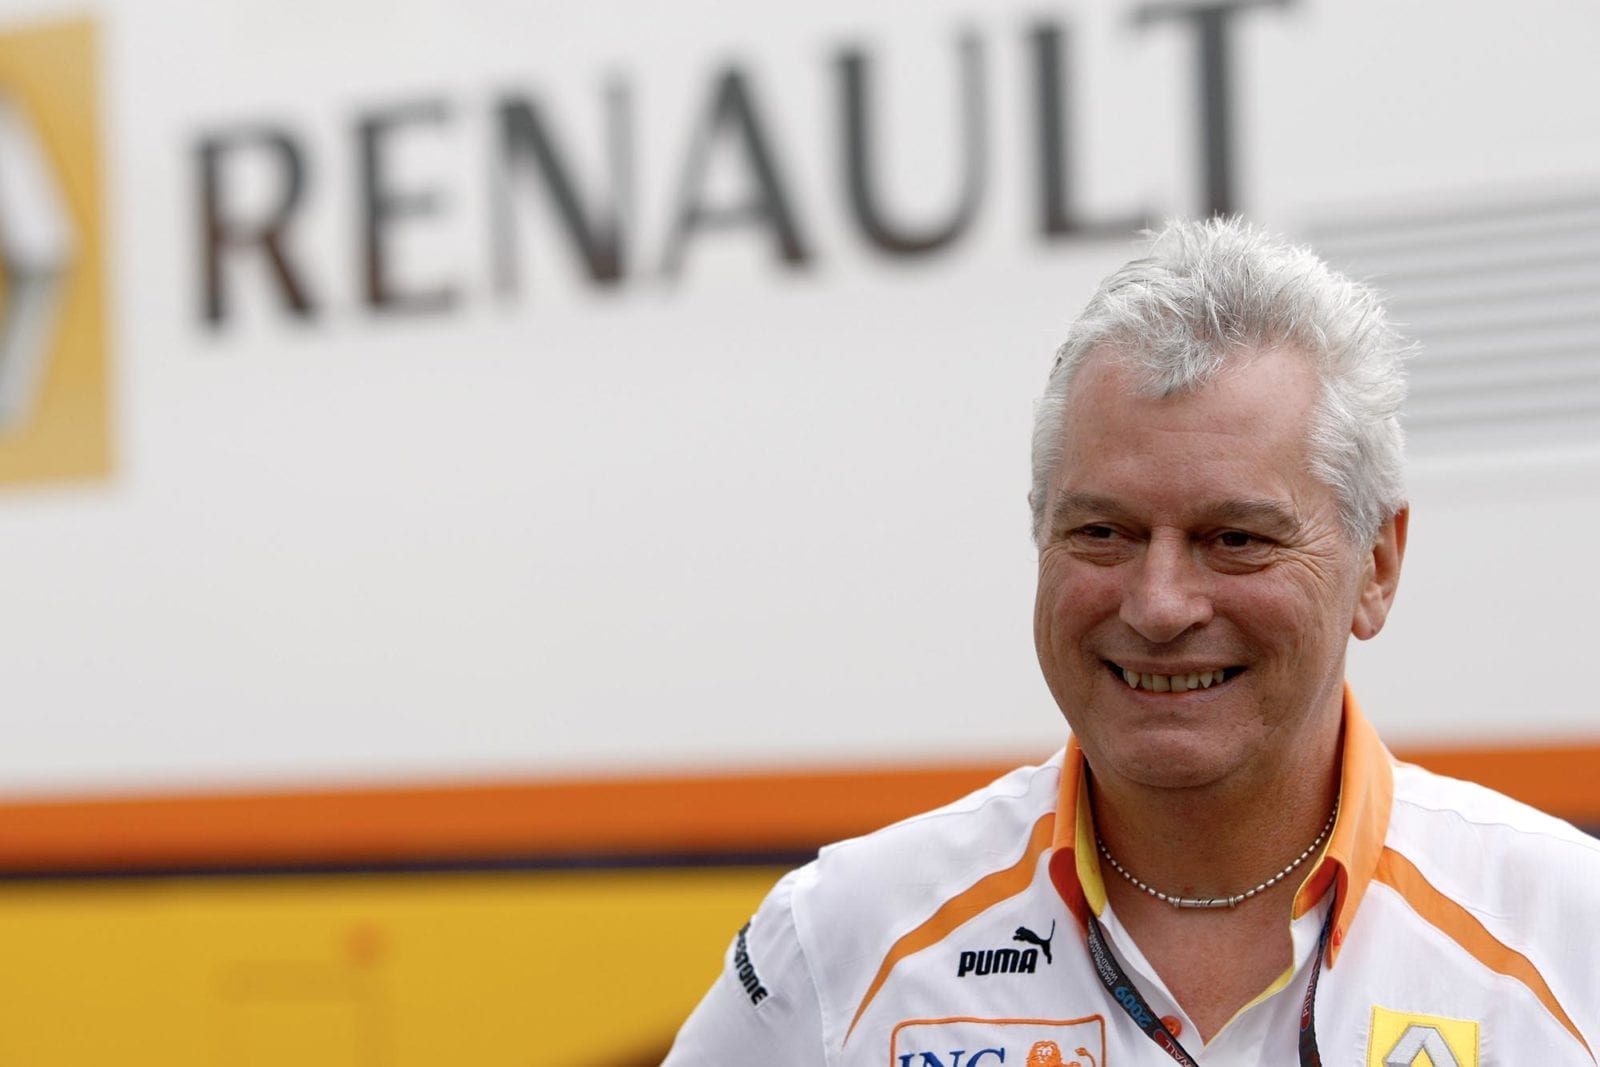 Pat Symonds Renault technical director at the 2009 British Grand Prix